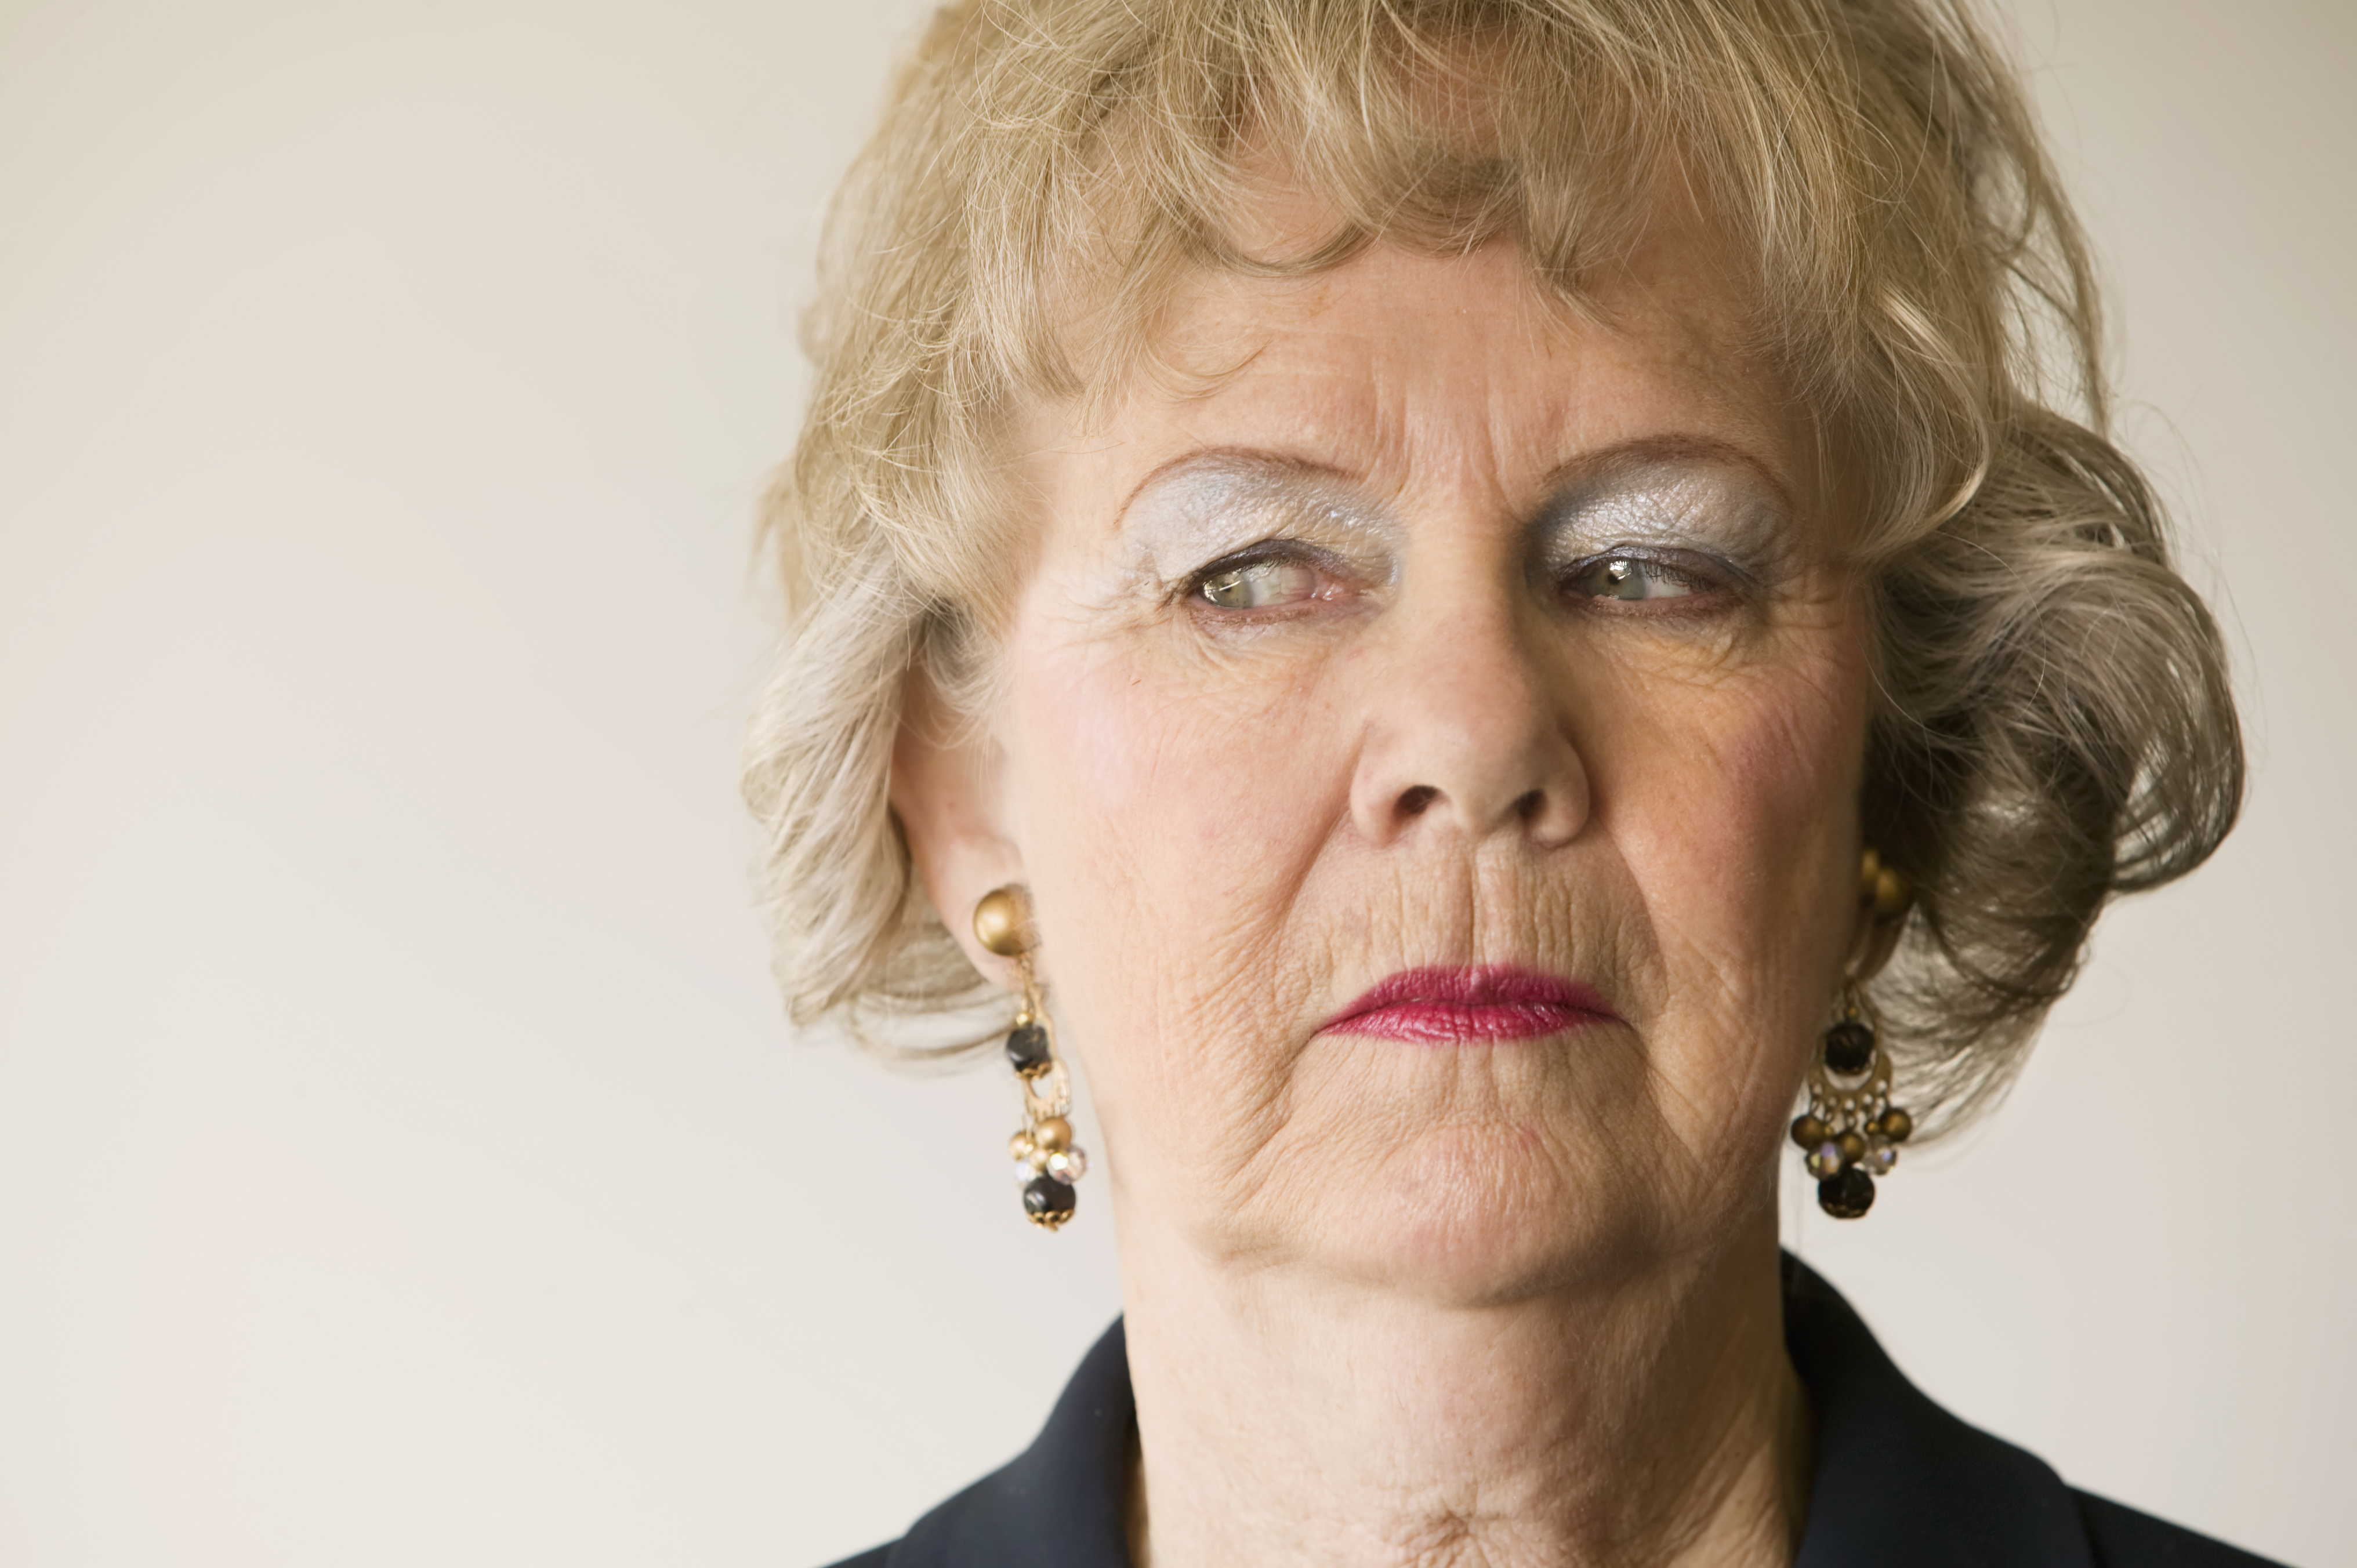 An angry elderly woman looking sideways | Source: Shutterstock